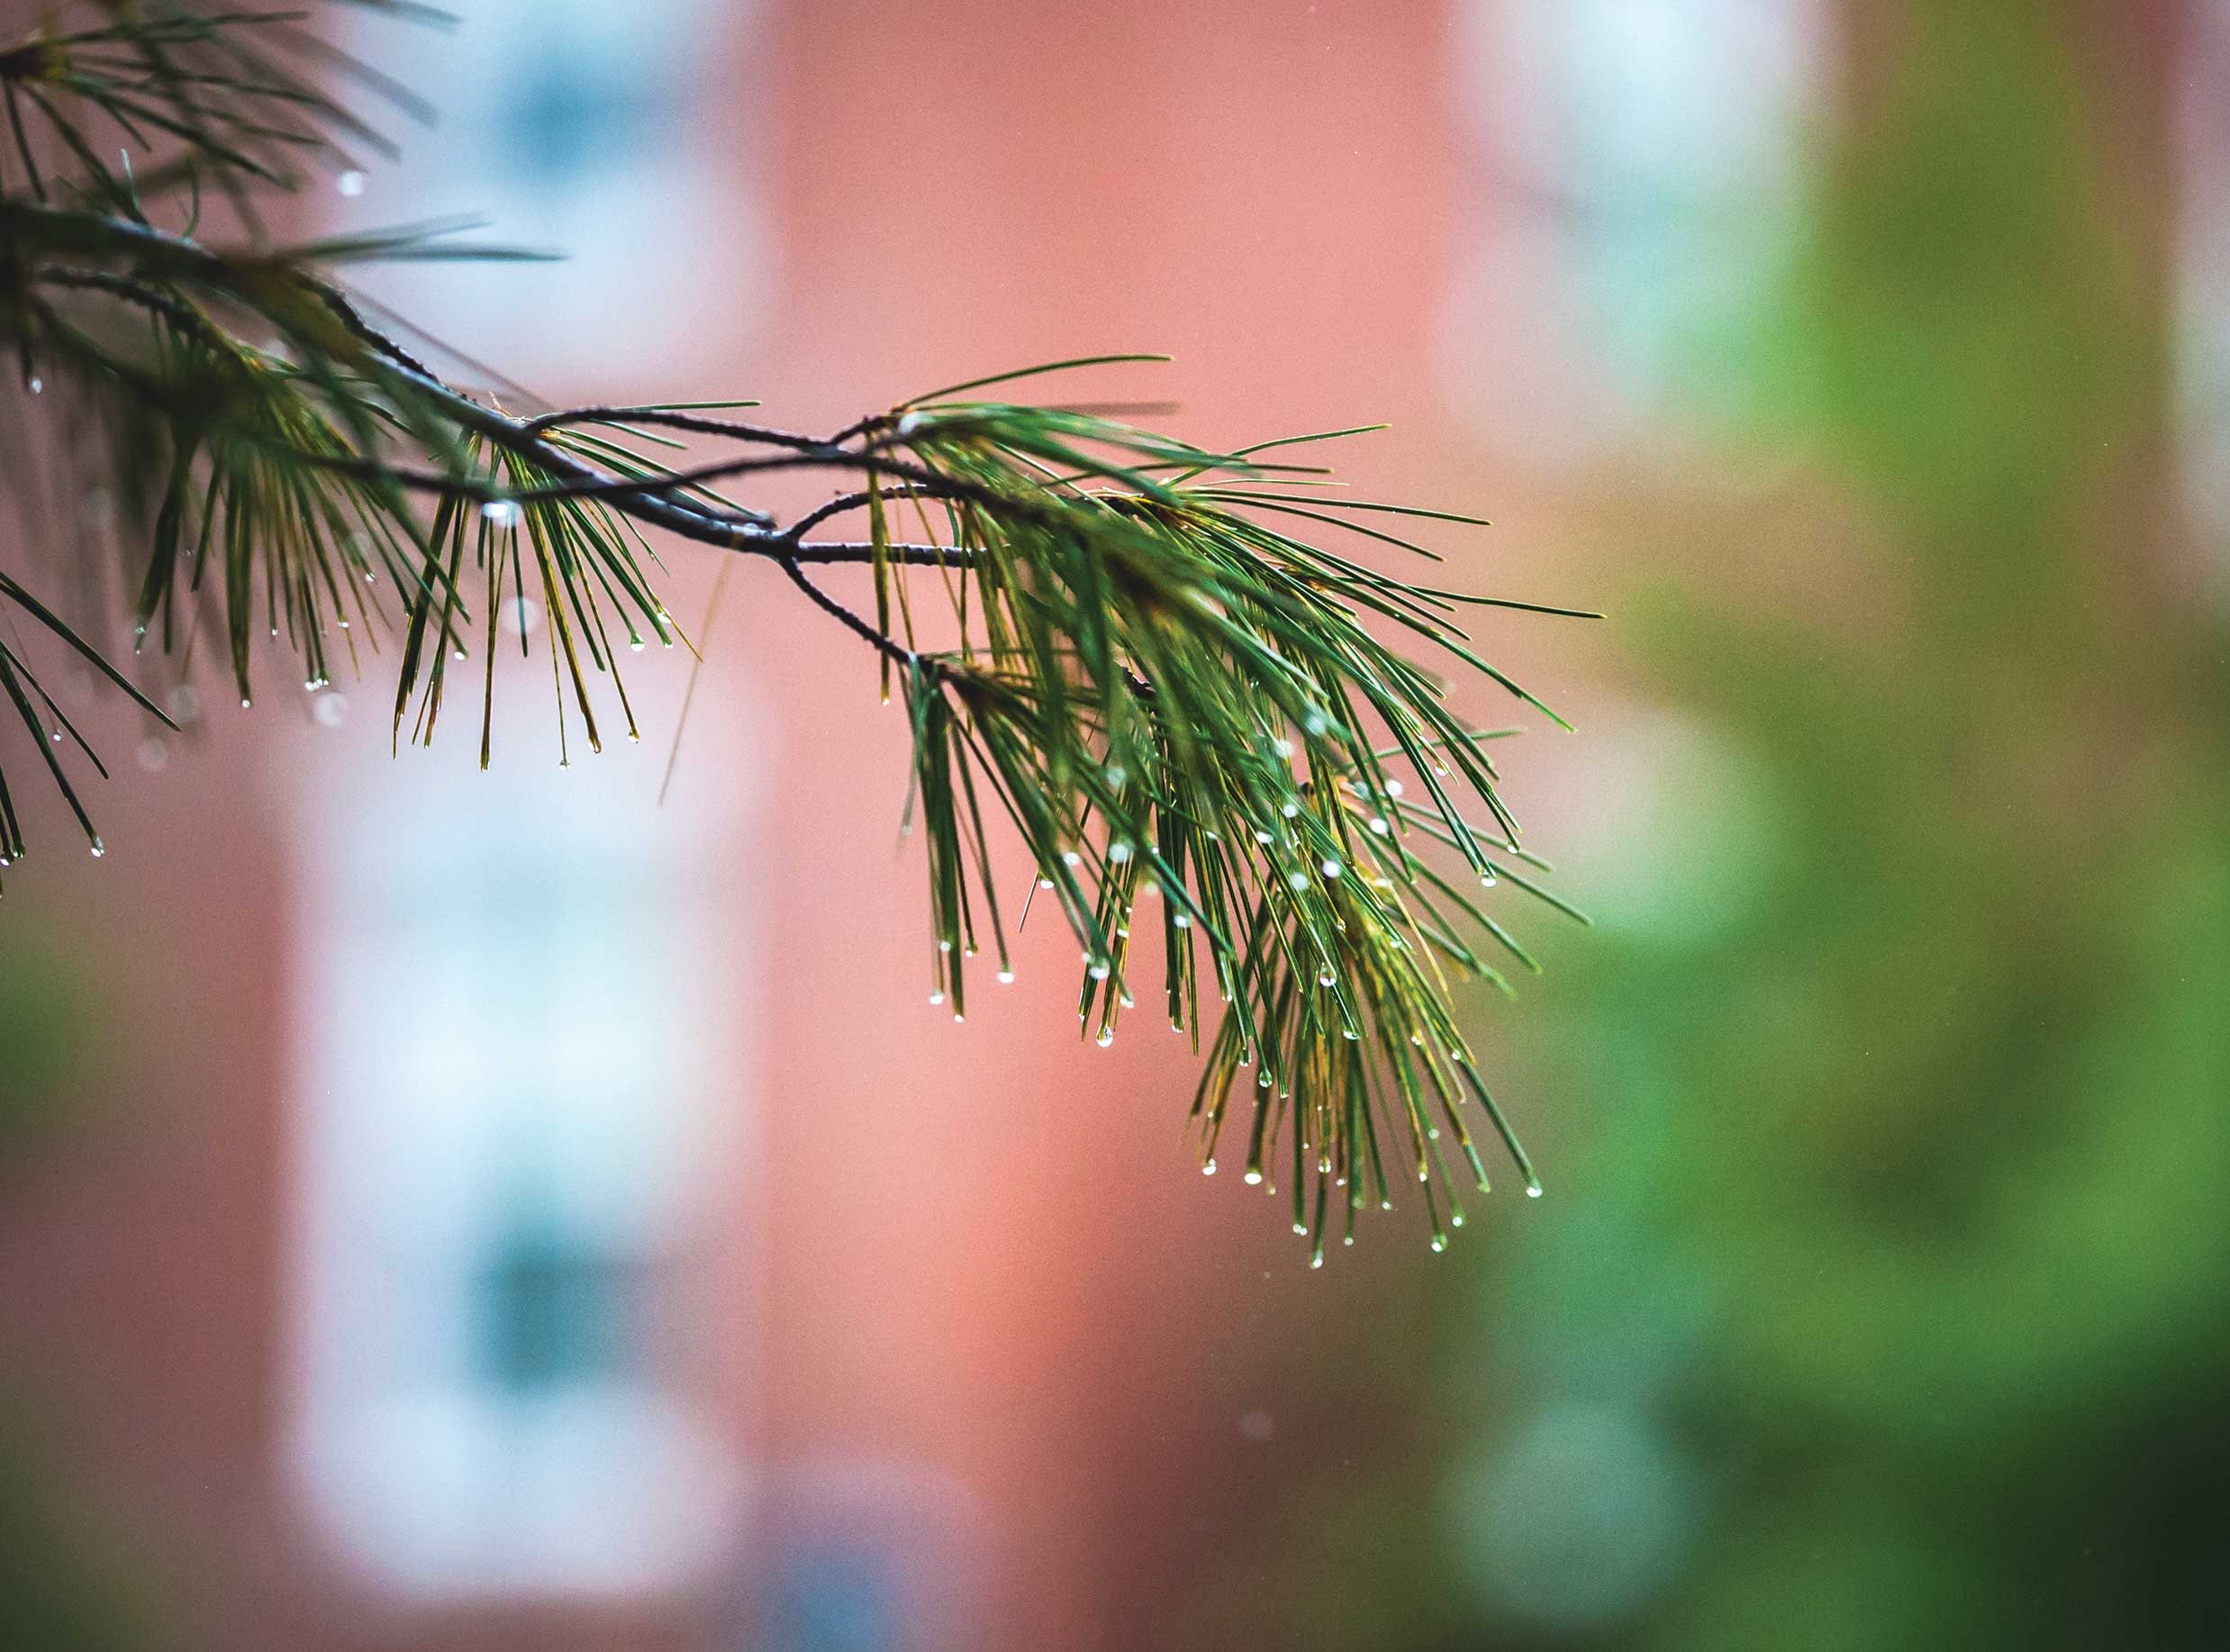 Dew on close-up of pine needles